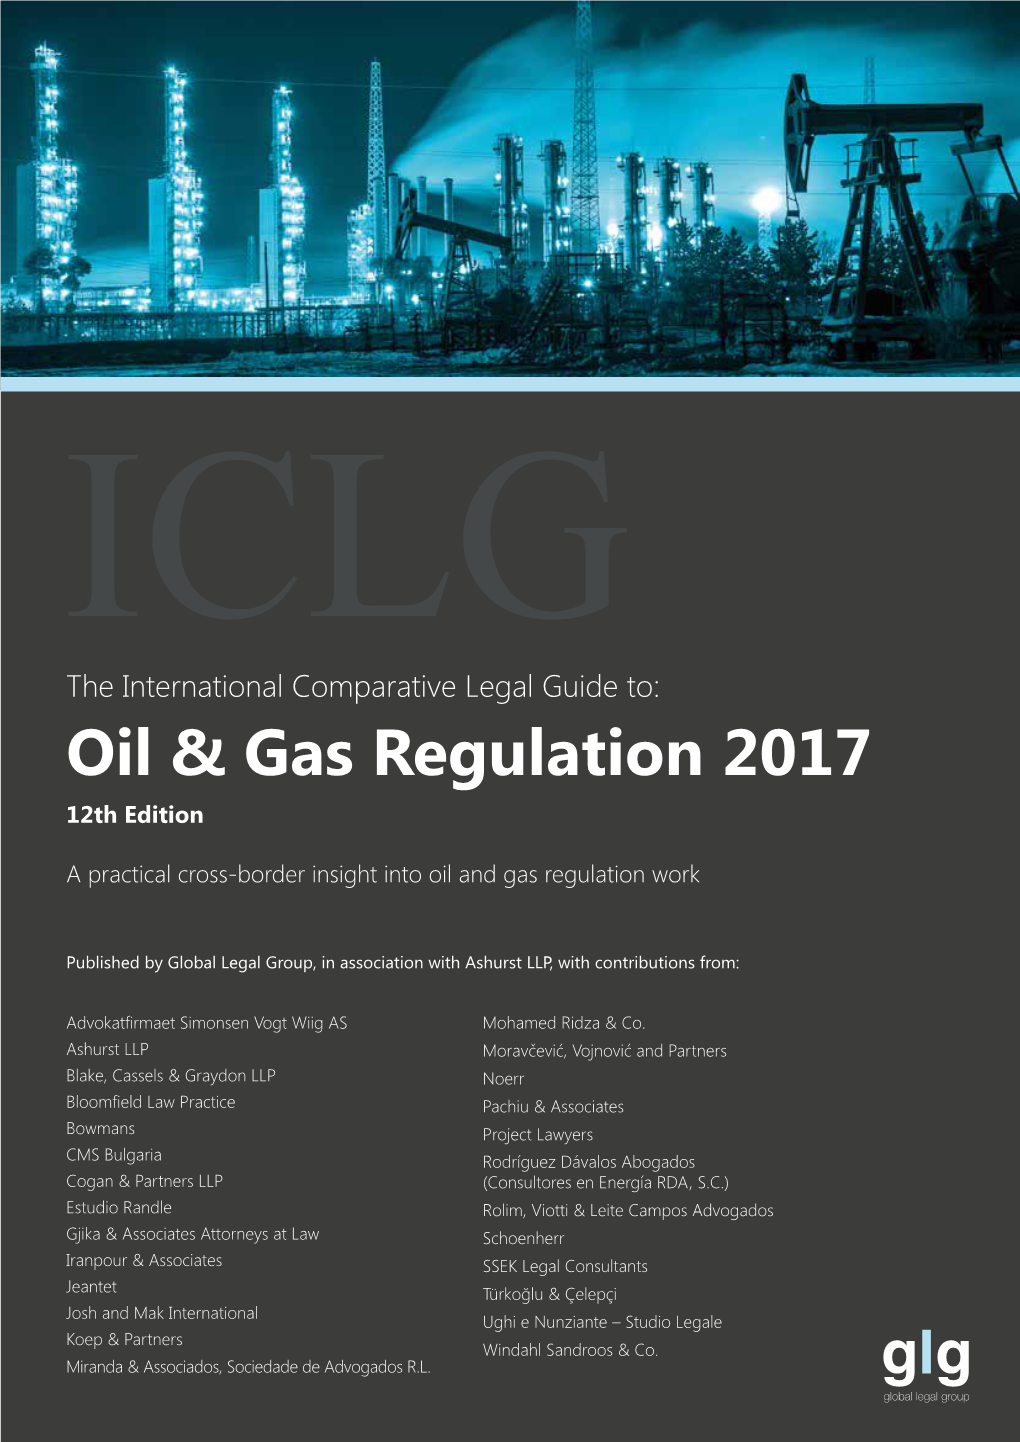 Oil & Gas Regulation 2017